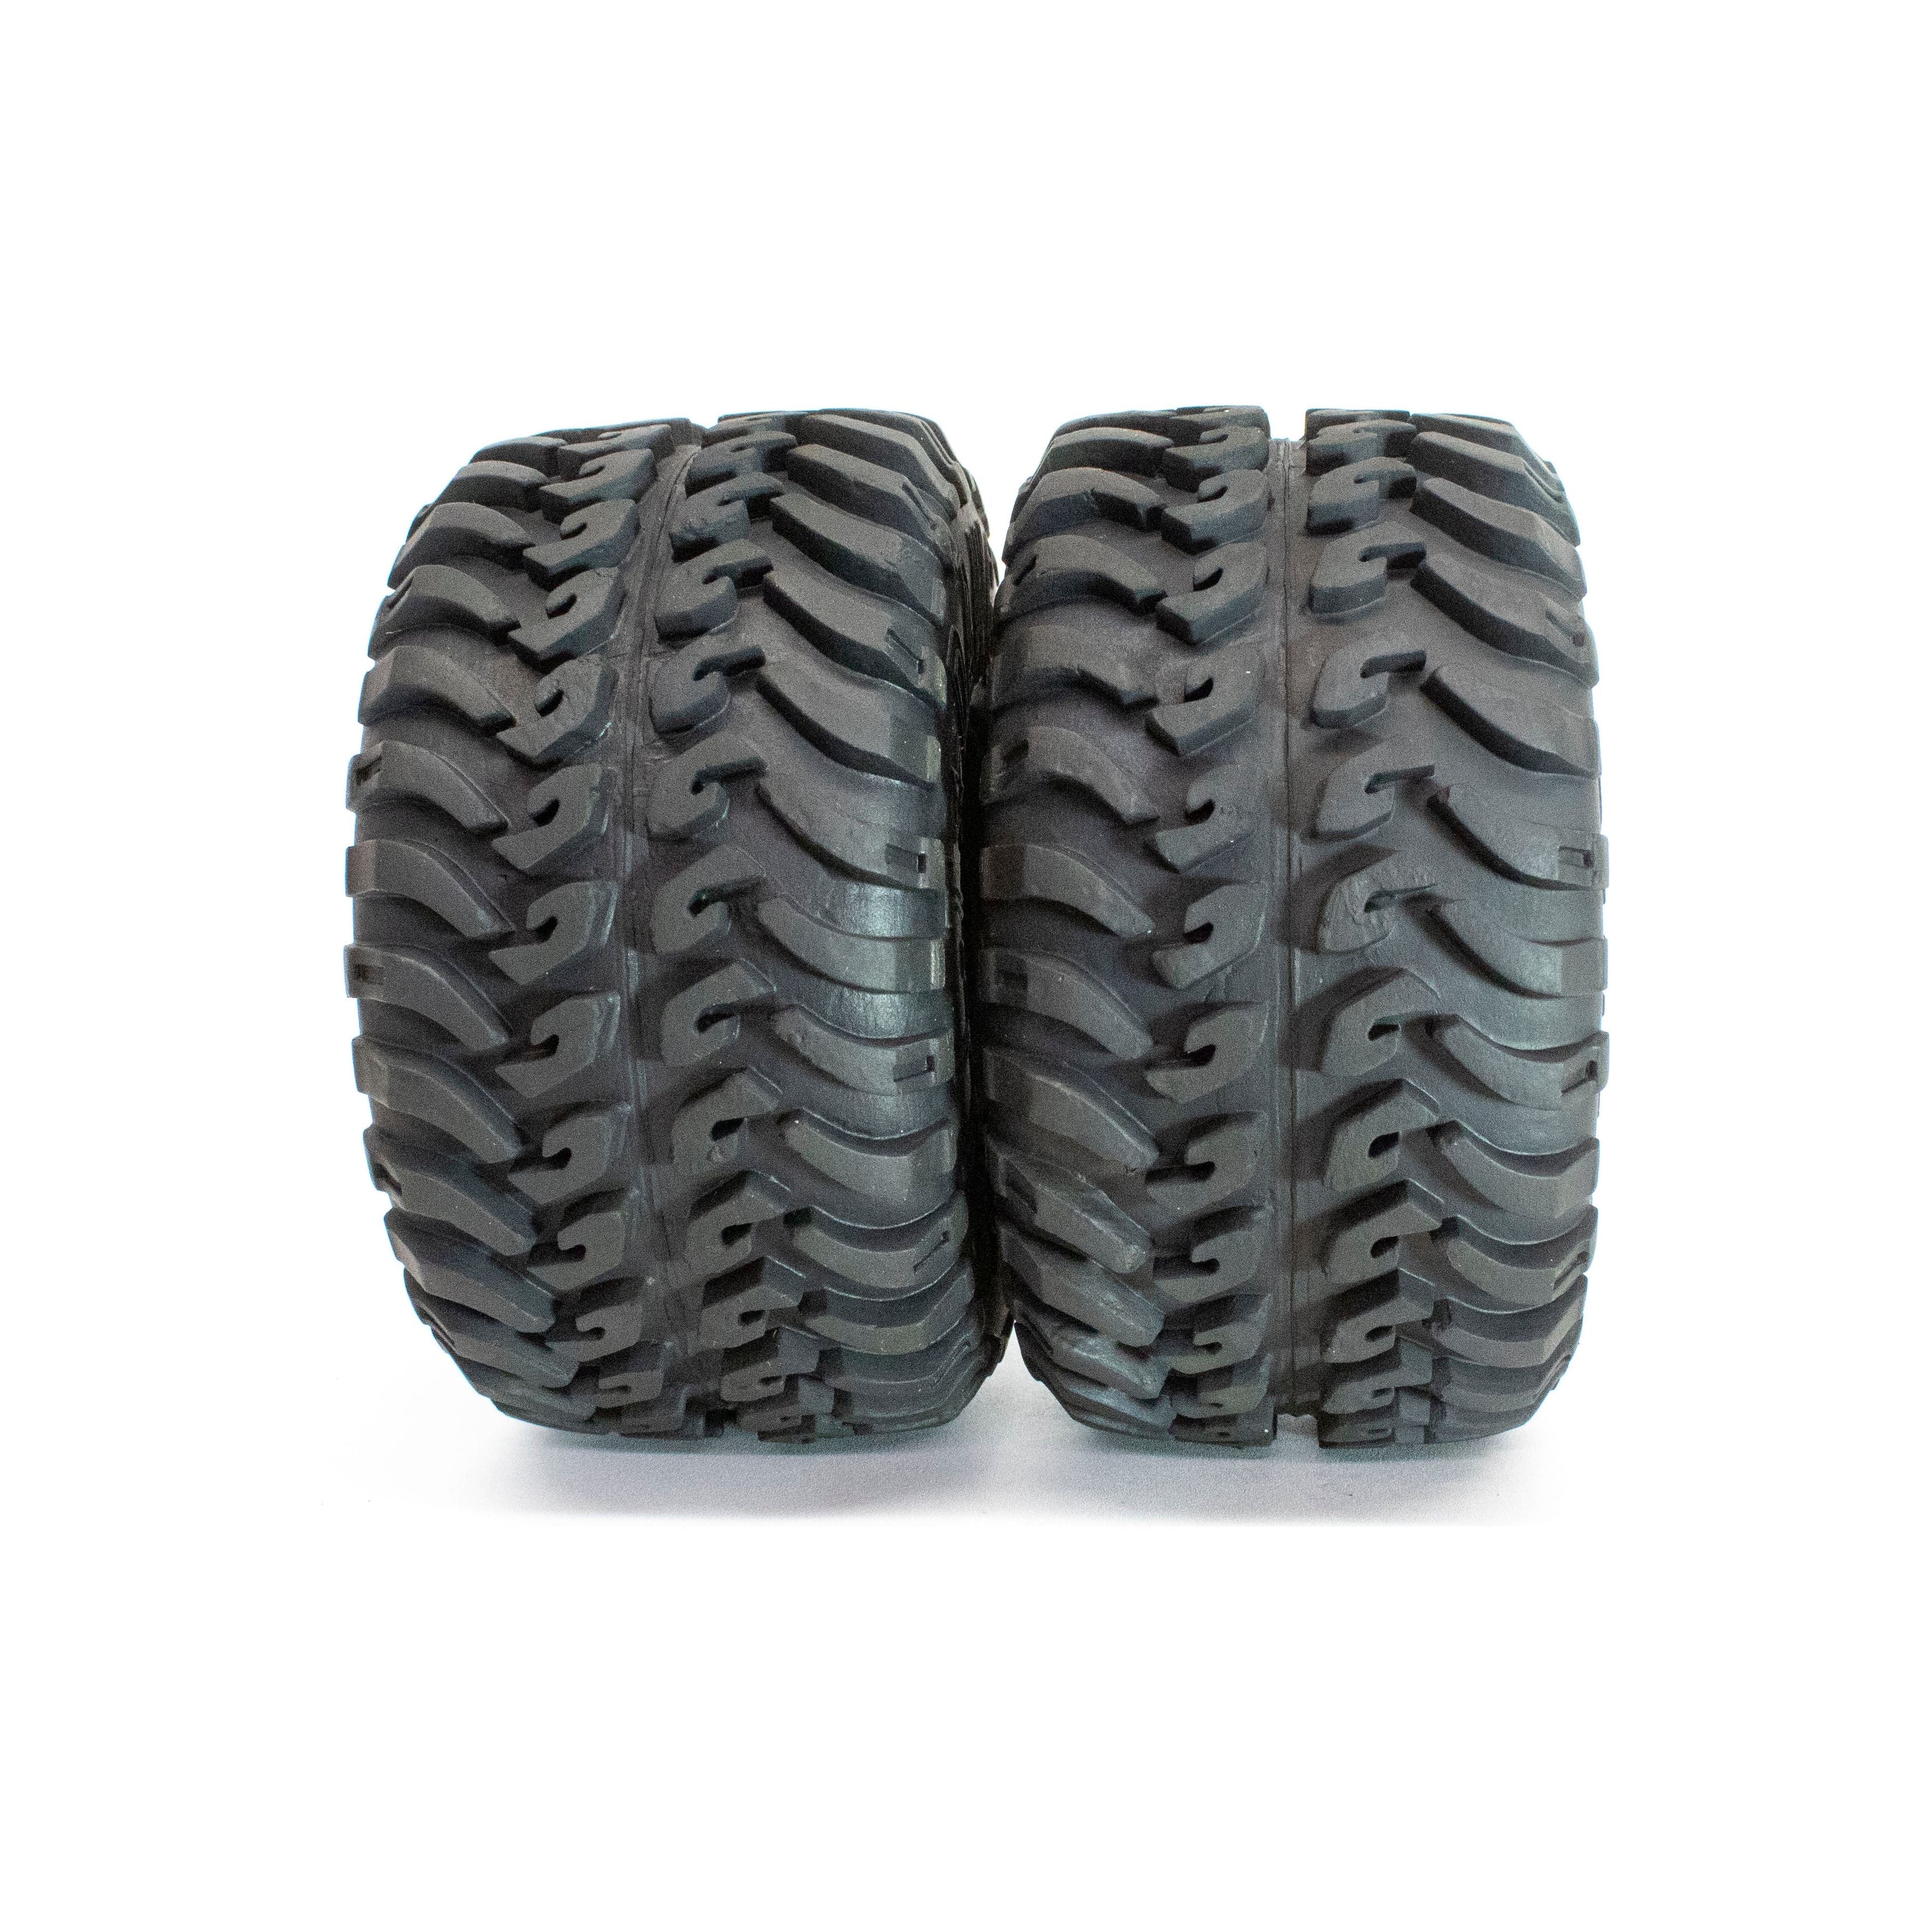 IMEX 2.2 All-T Tires (1 Pair)